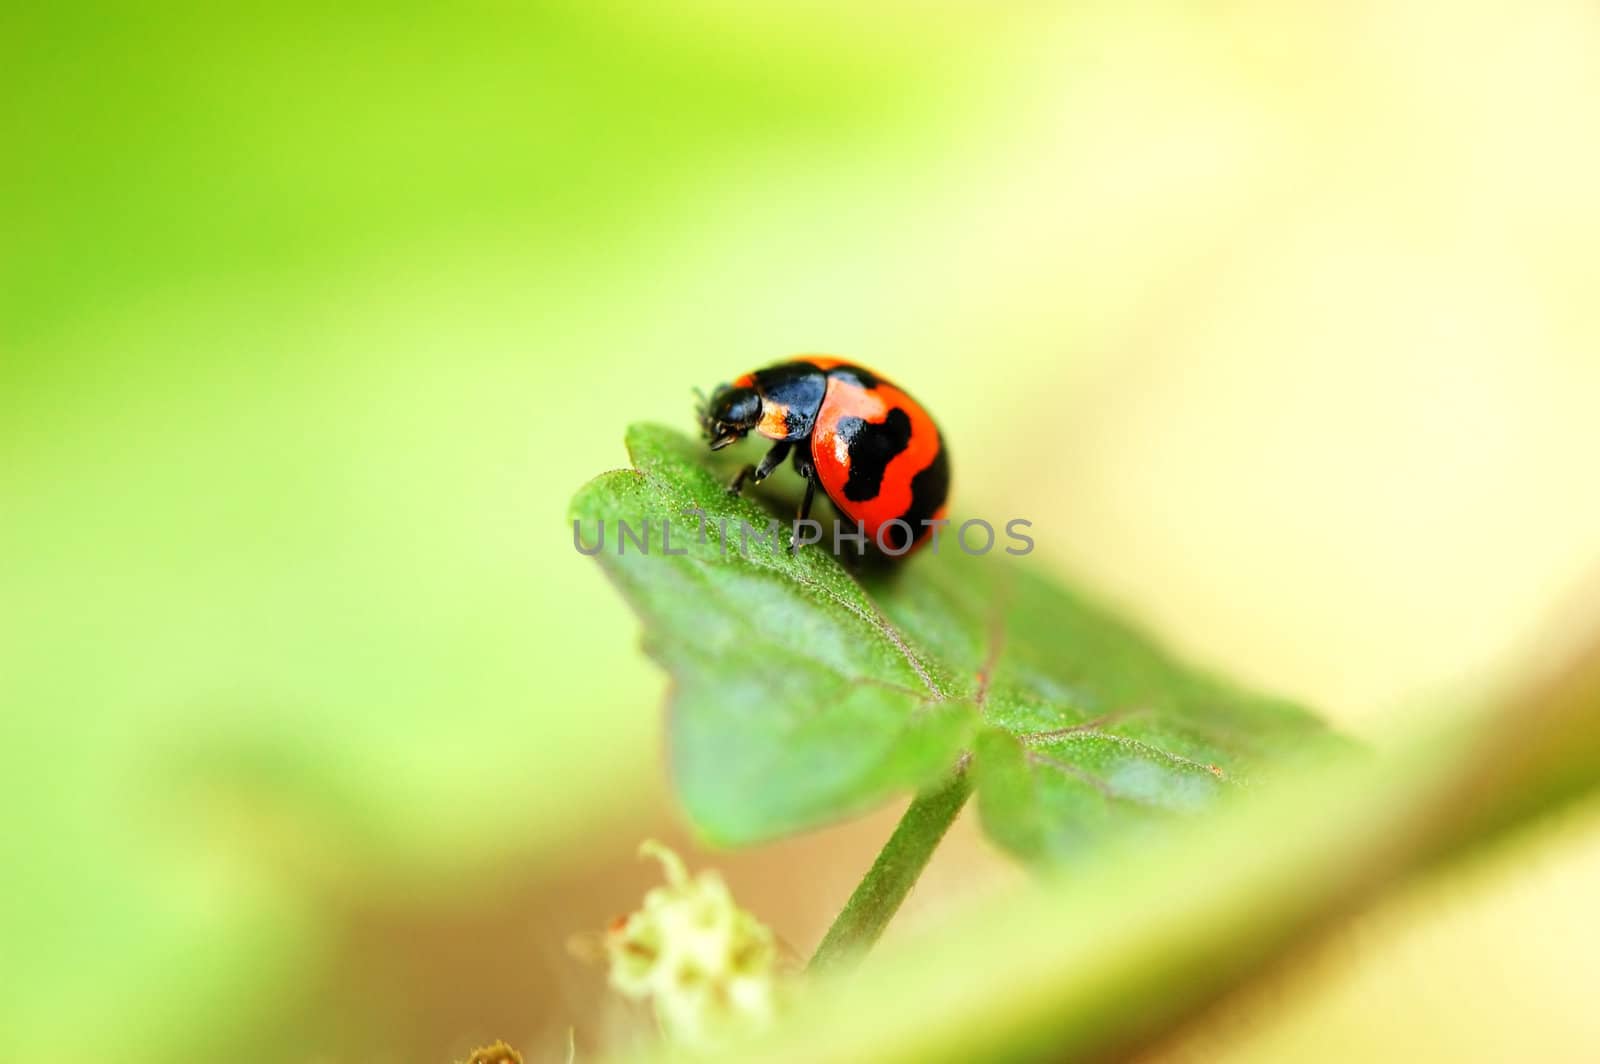 A ladybird staying on a green leaf